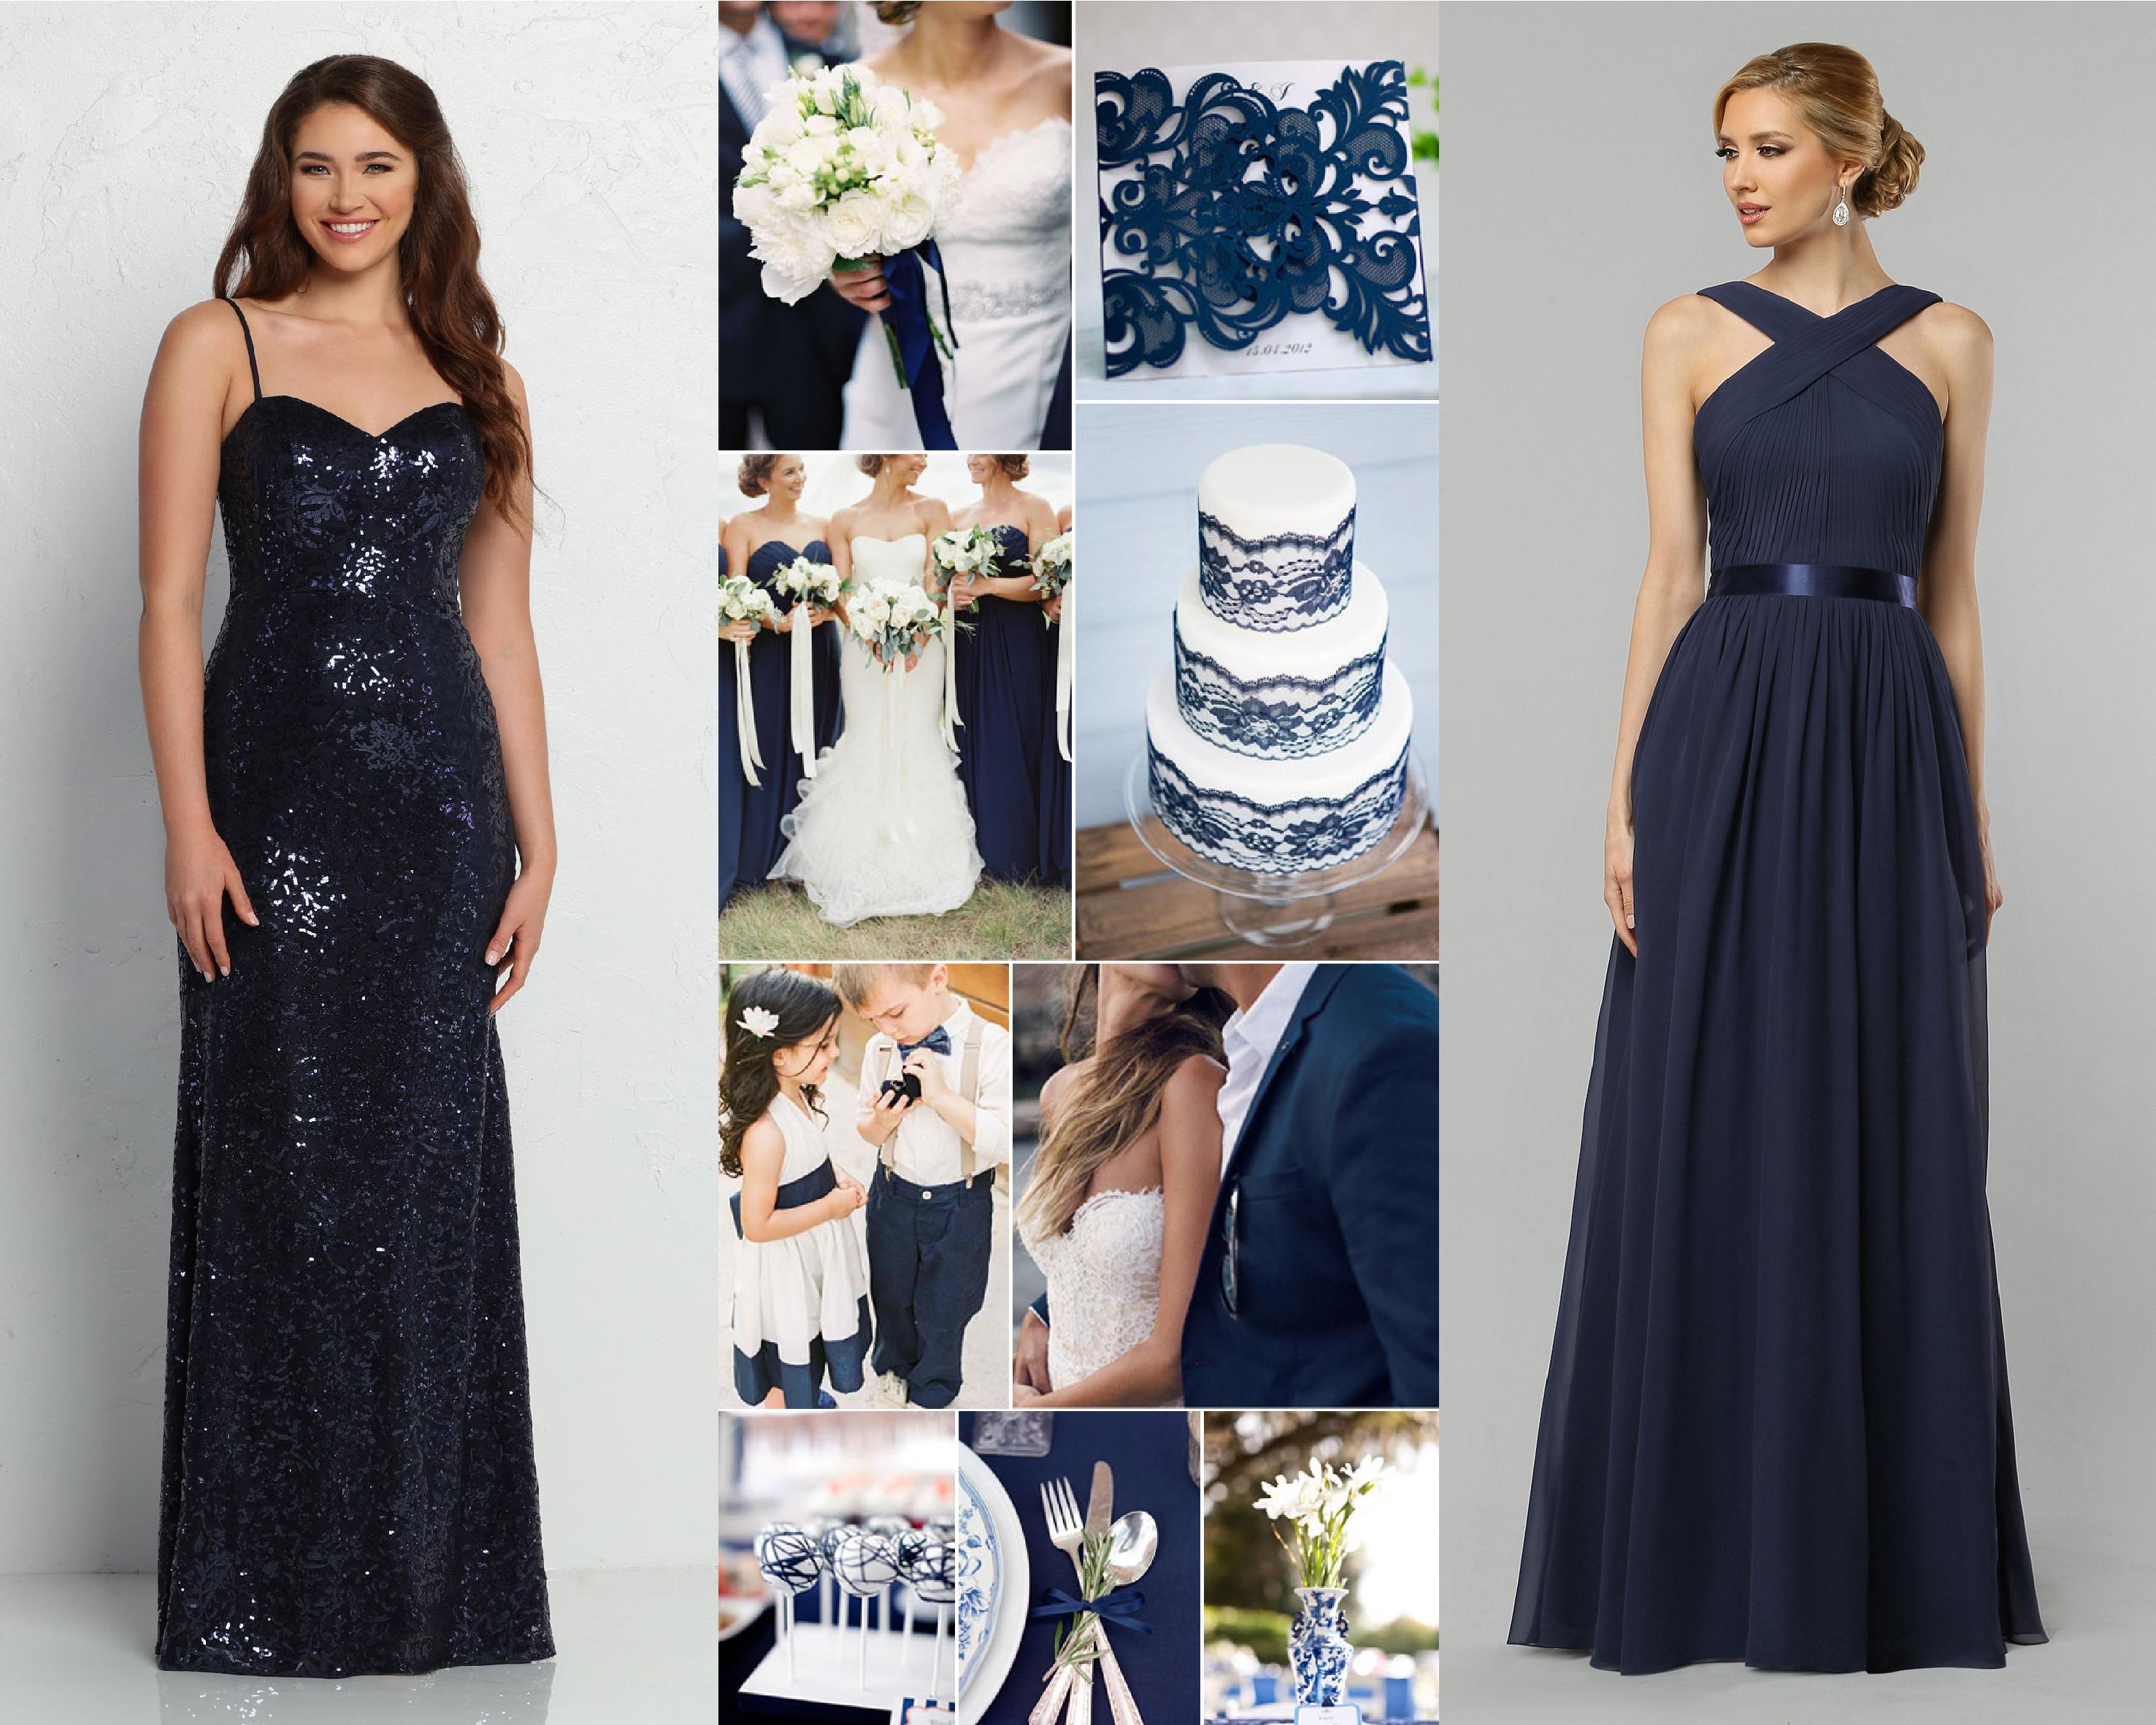 Classic Wedding Color Scheme White with Blue Bridesmaid Dresses